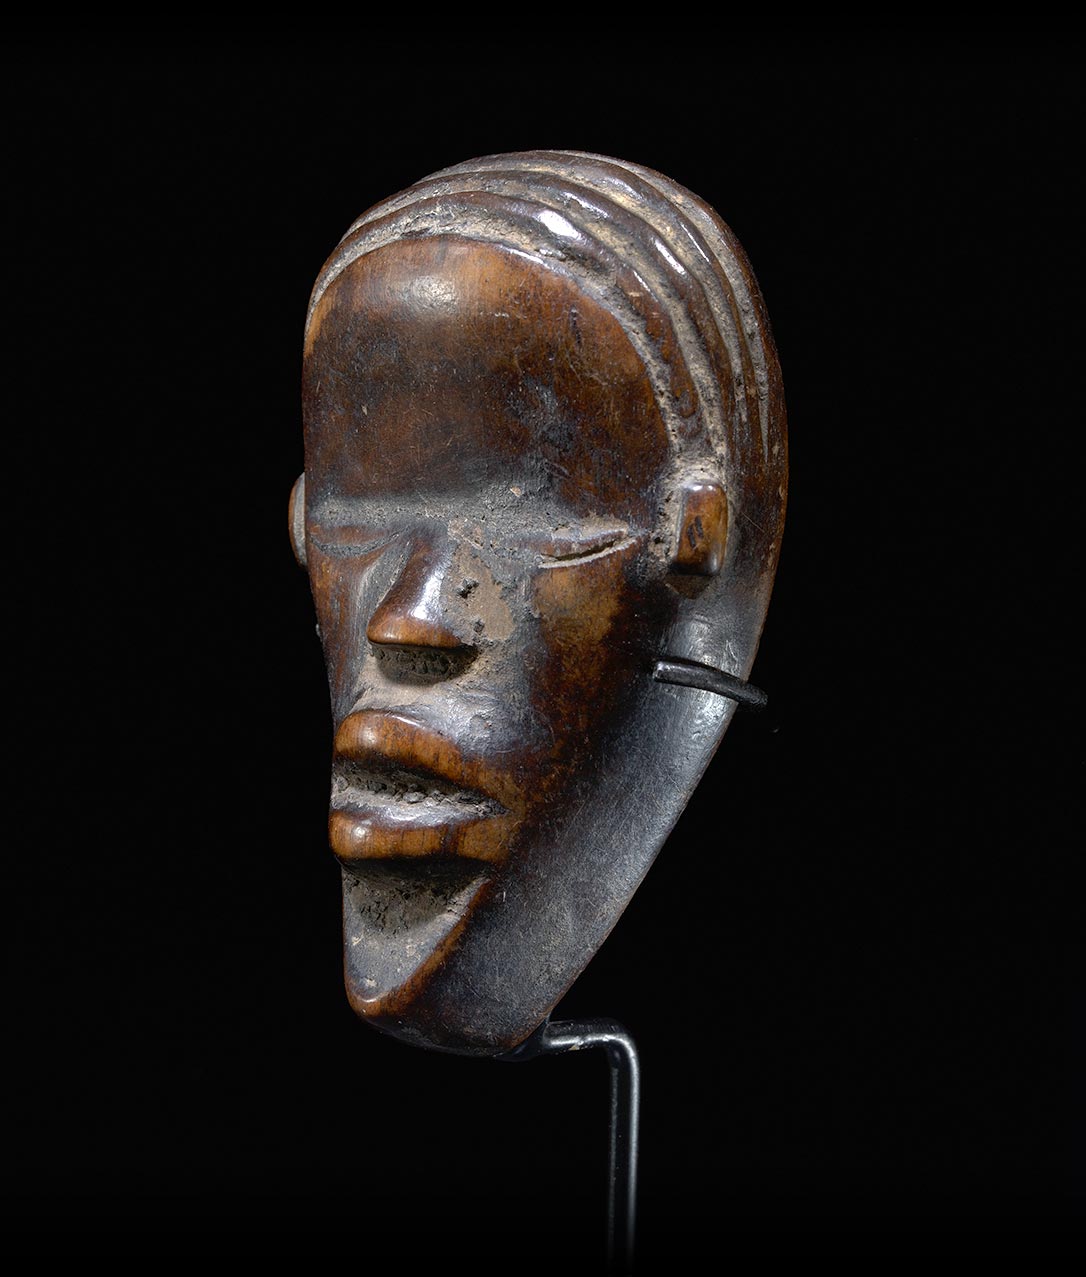 Dan talisman or passeport mask - Auctions African Art Gallery